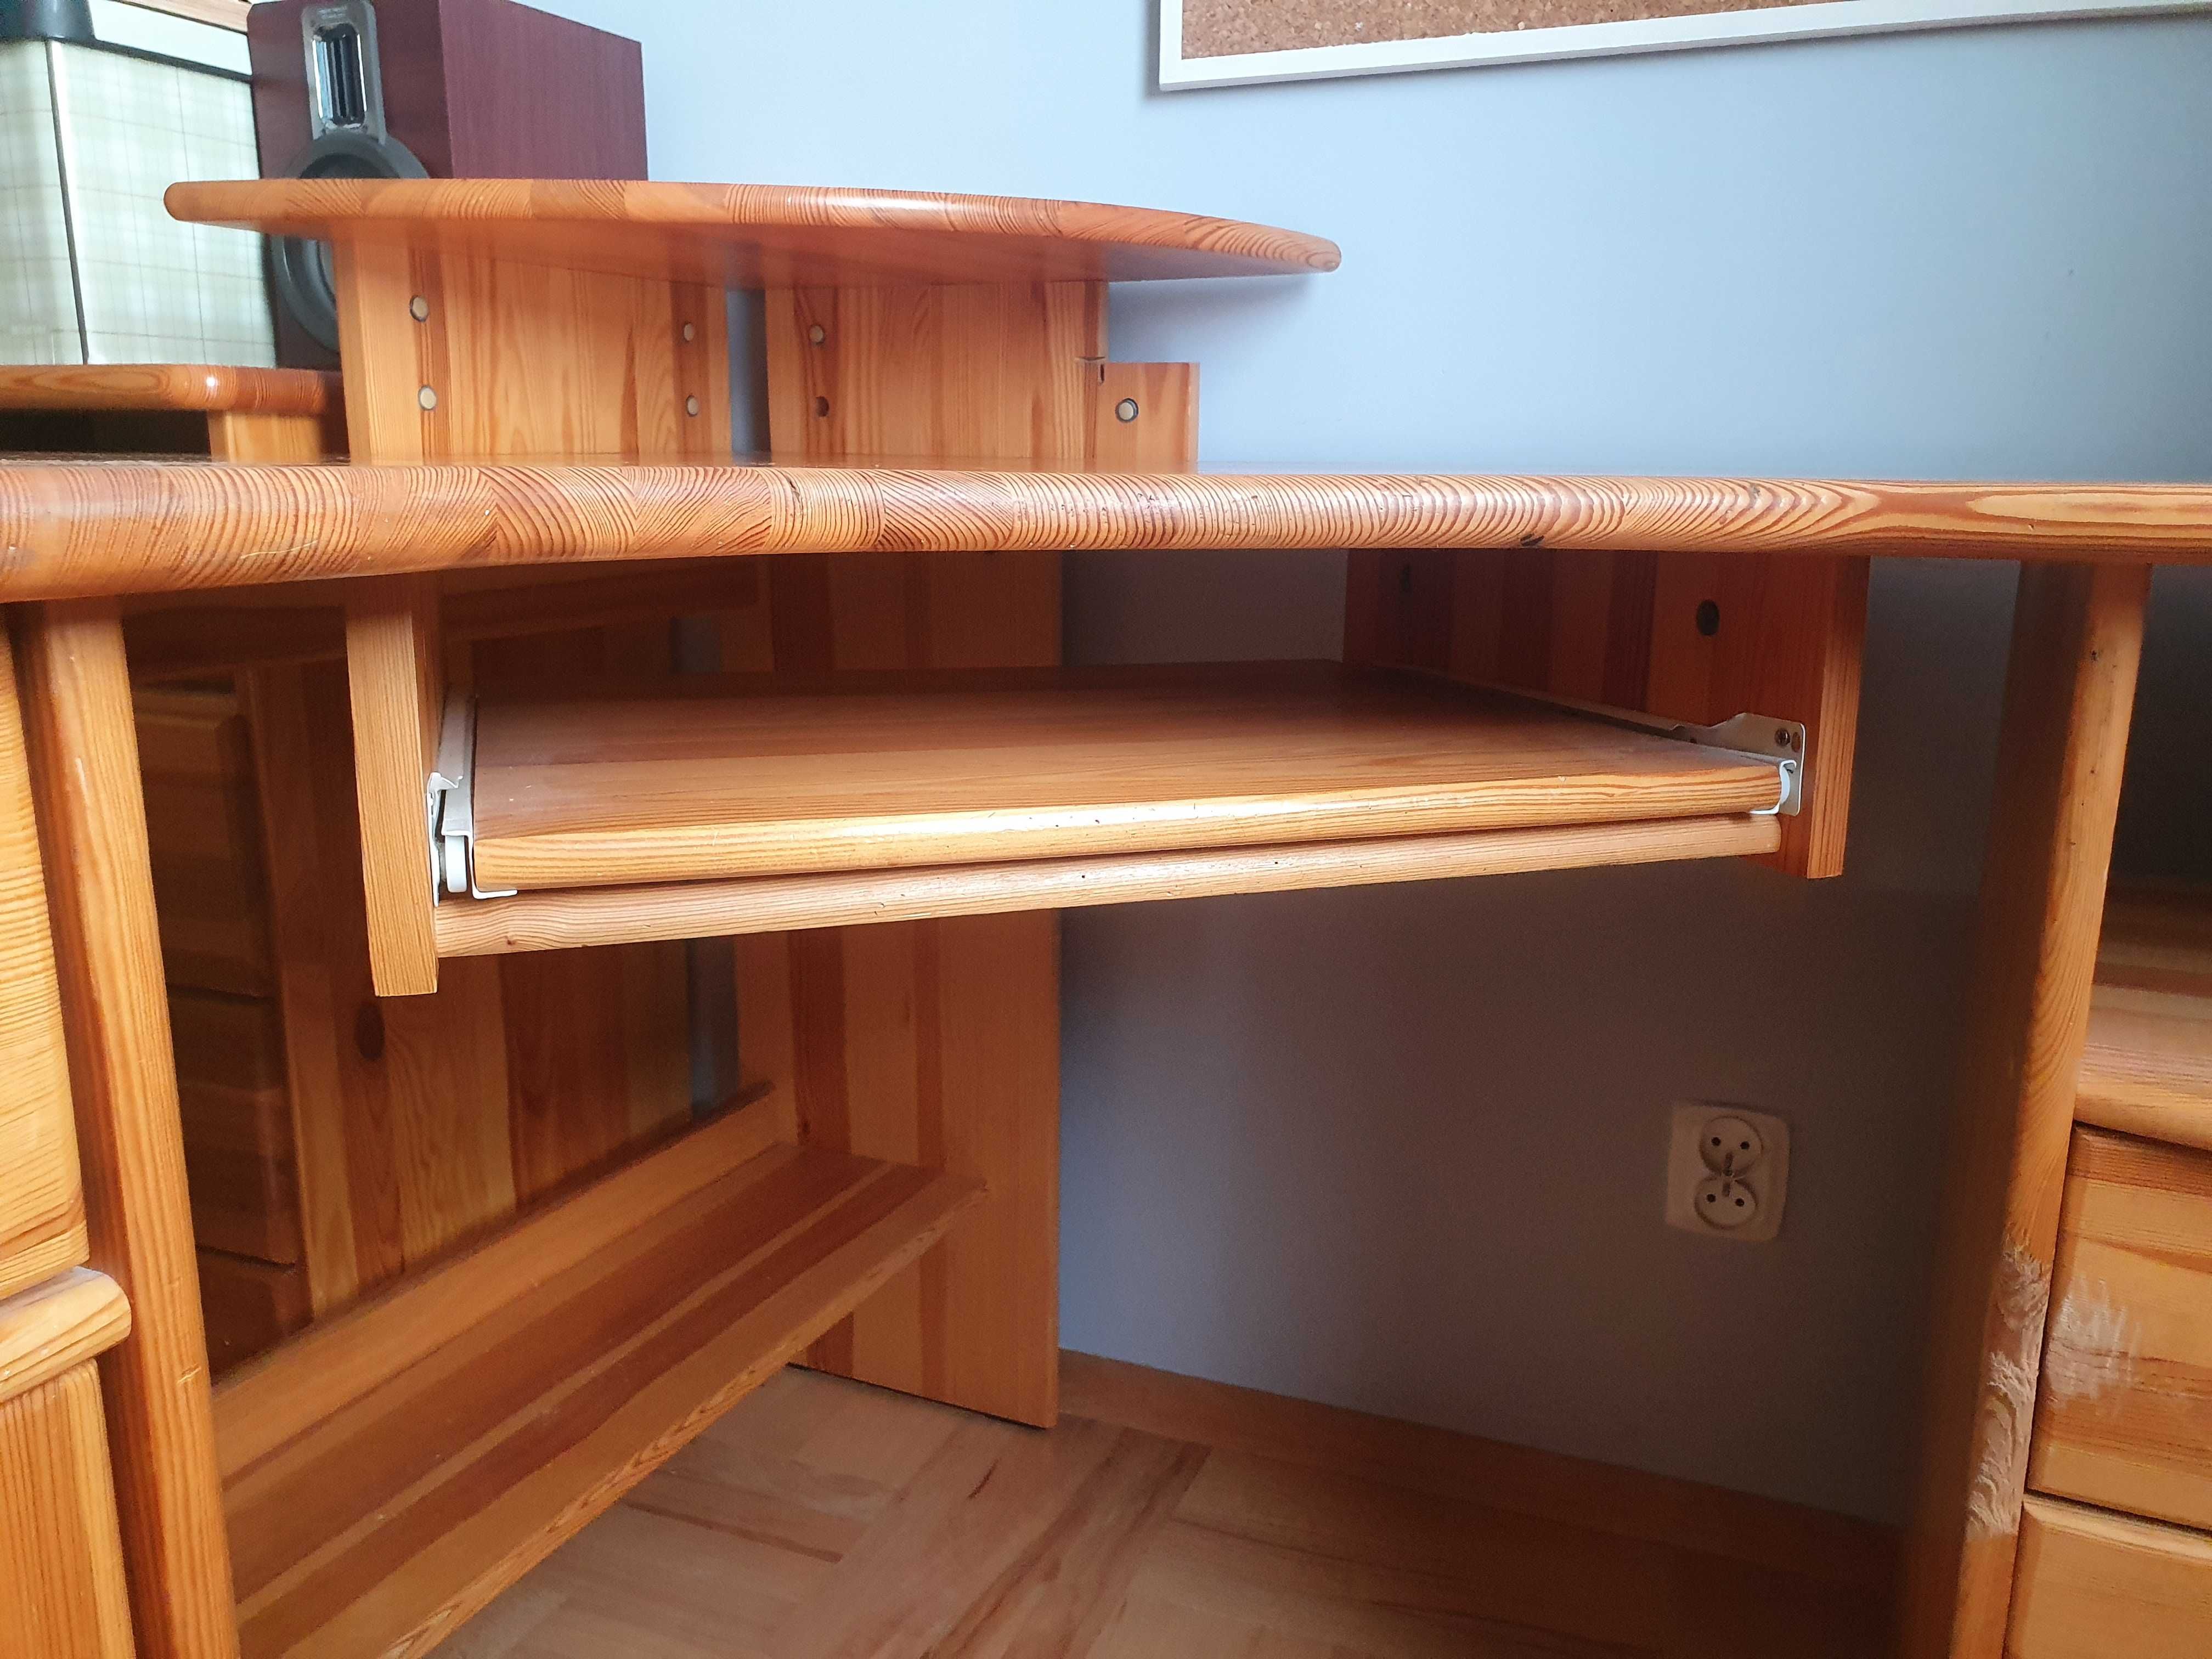 Drewniane sosnowe narozne biurko